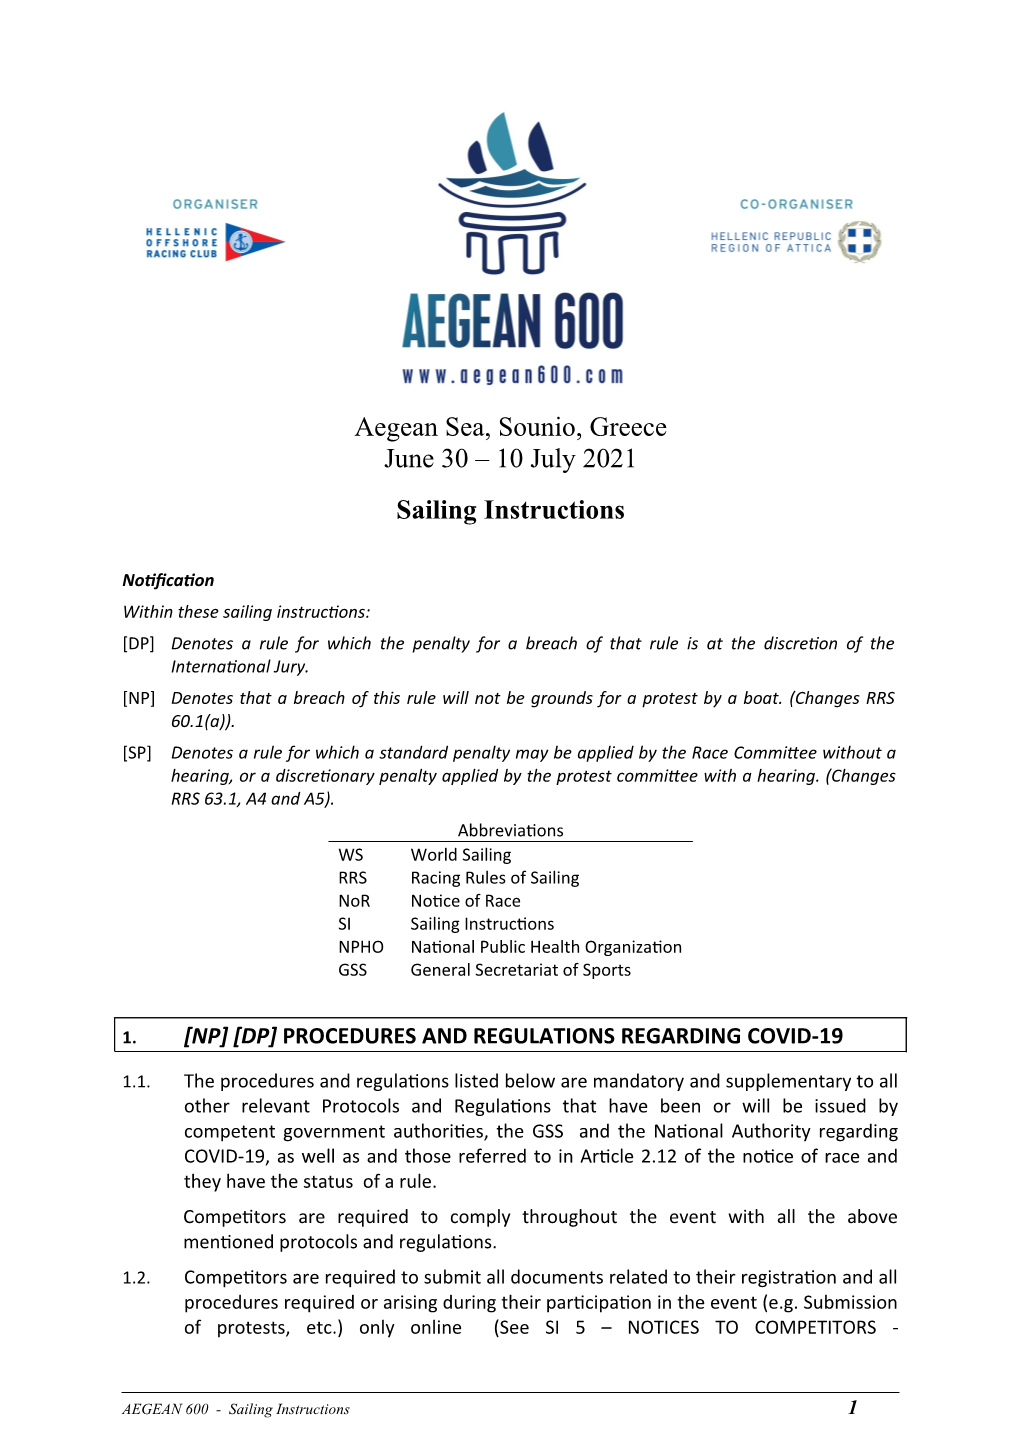 Aegean 600 Sailing Instructions 2021